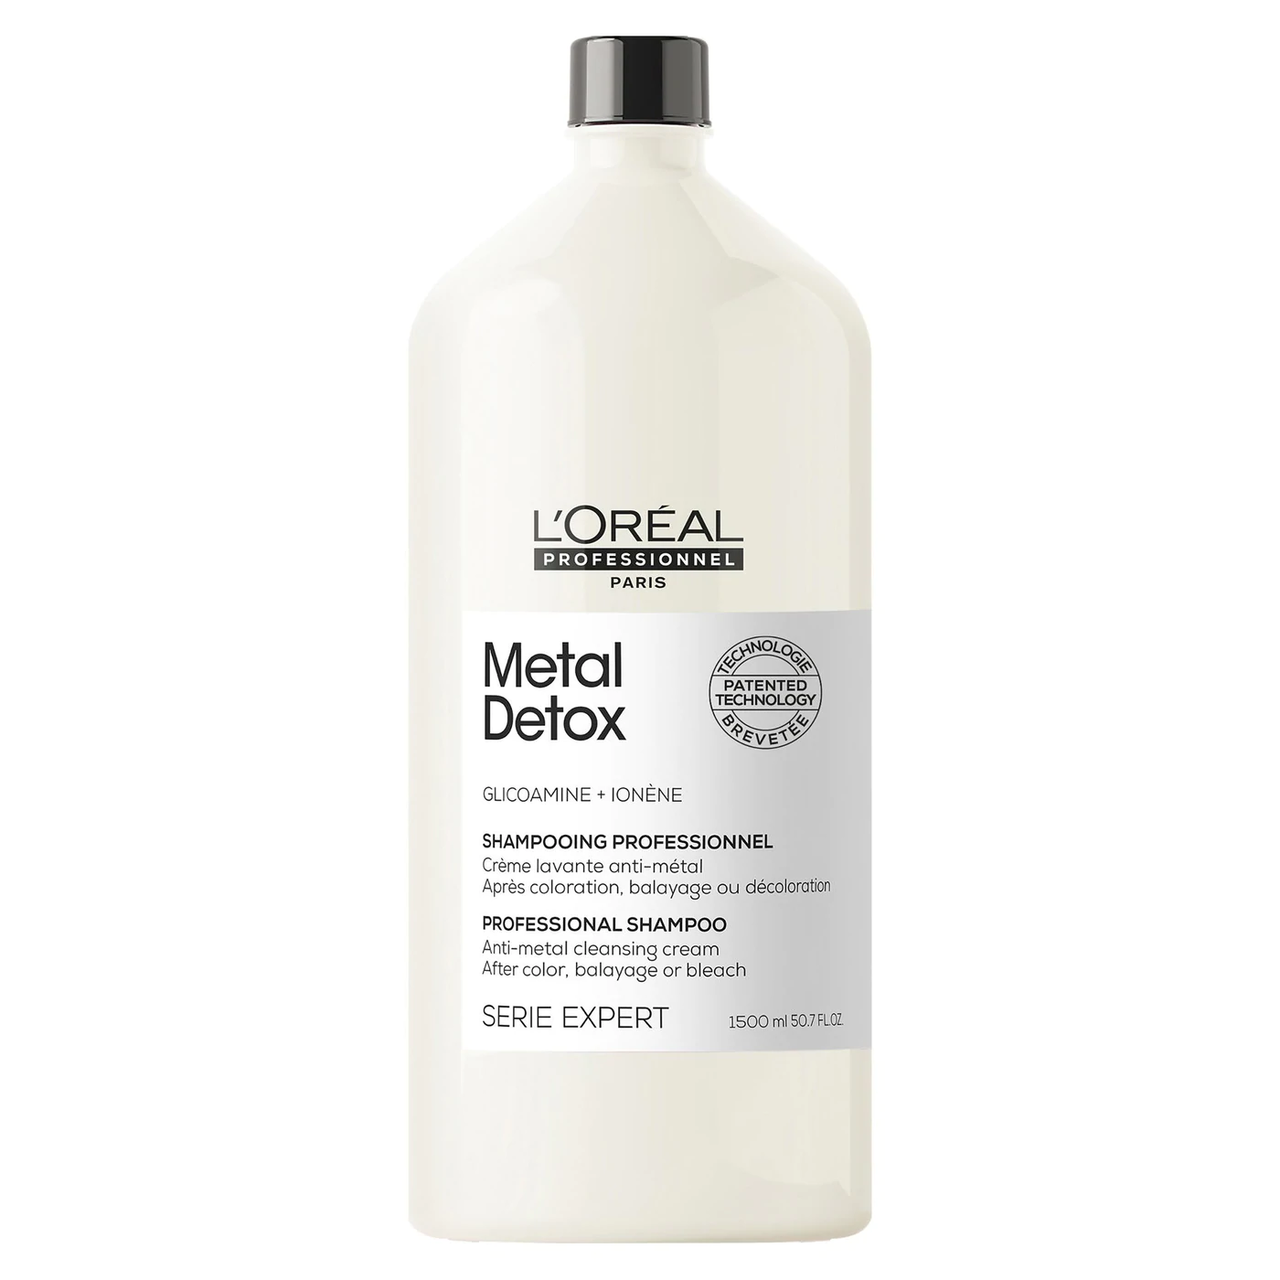 L'Oreal Professionnel Metal Detox Shampoo 1500ml